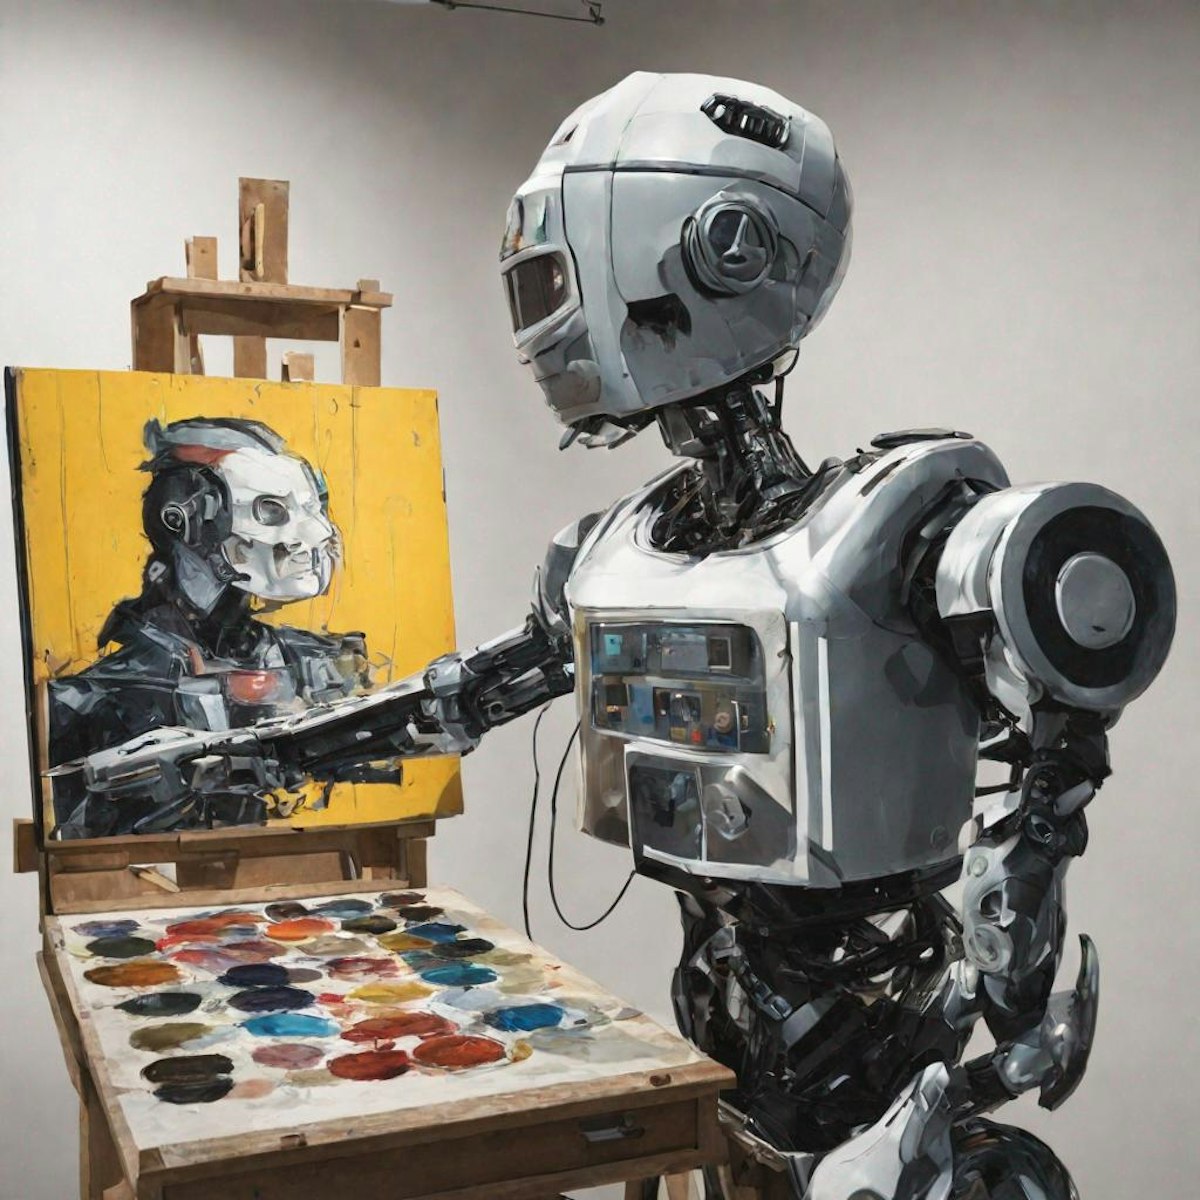 Prompt: a robot making art